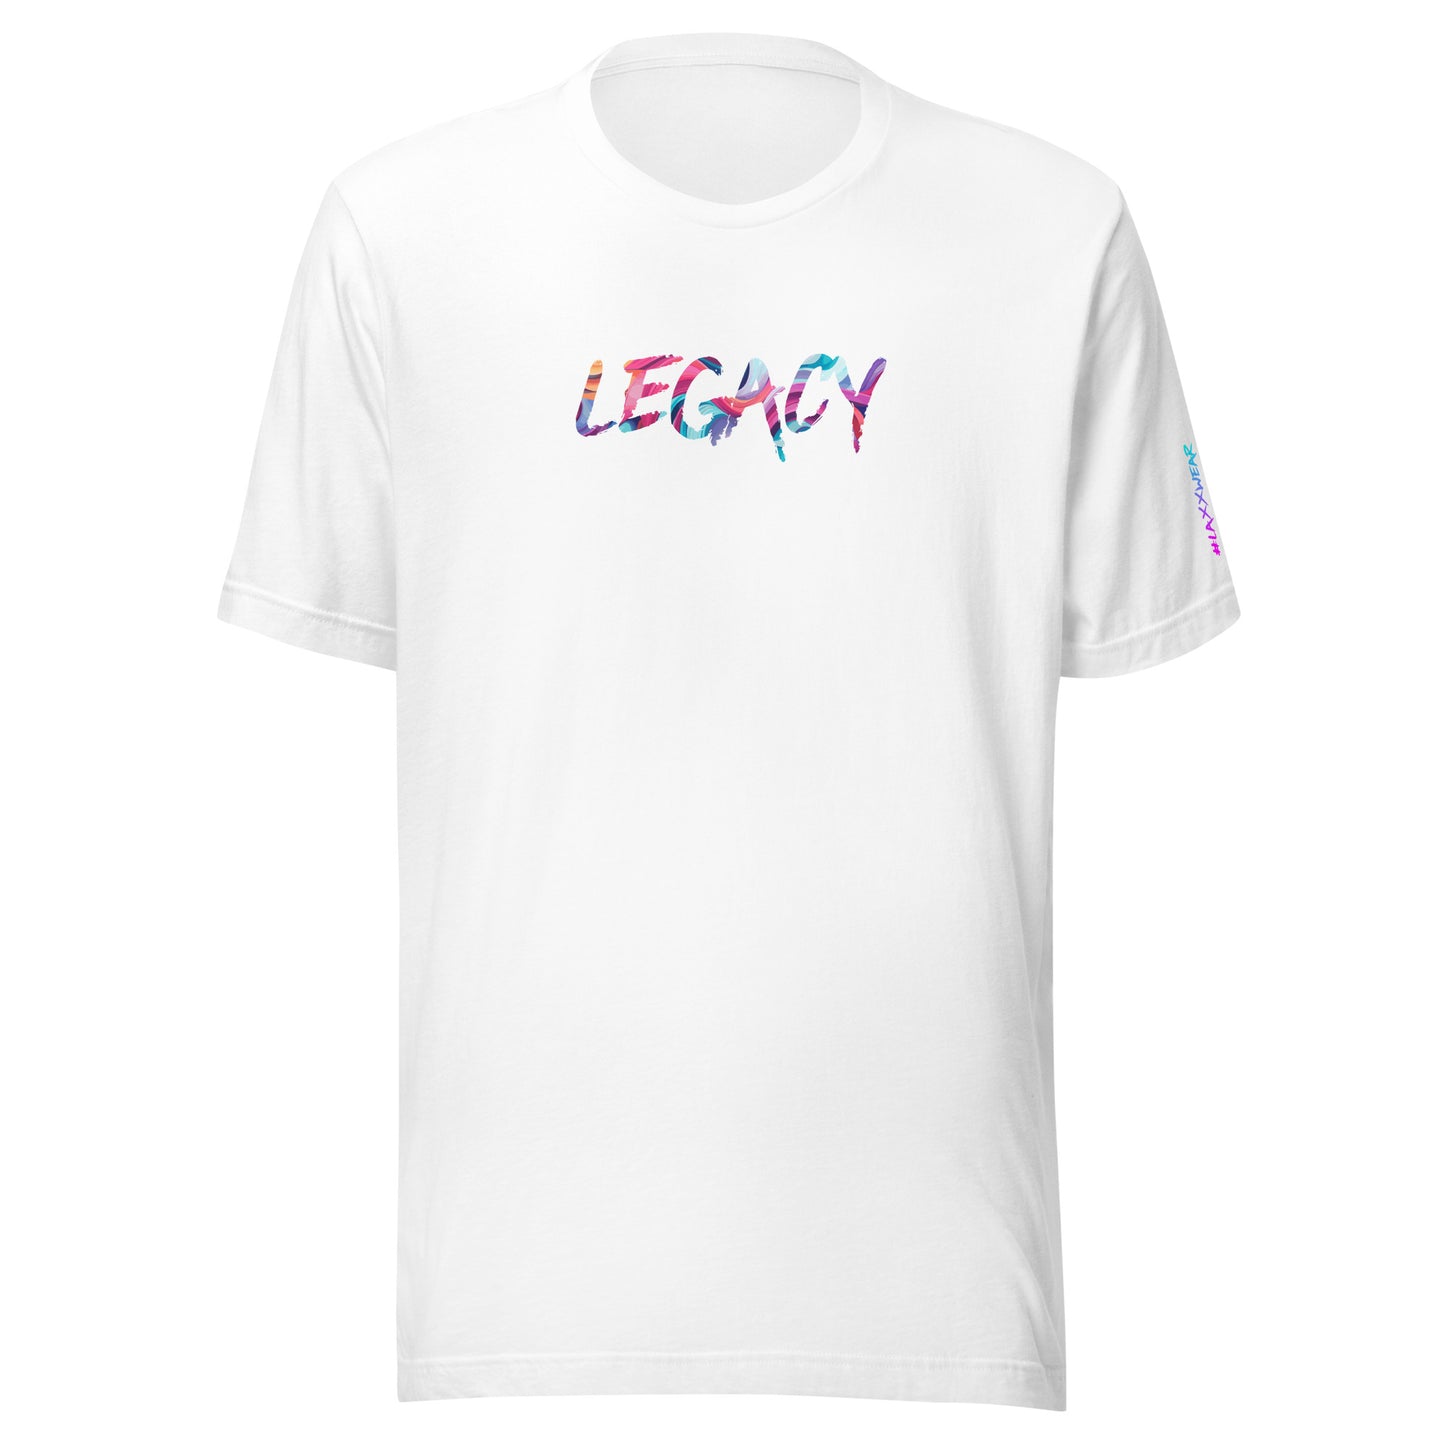 "Words of Encouragement" T-Shirt - Legacy Q323